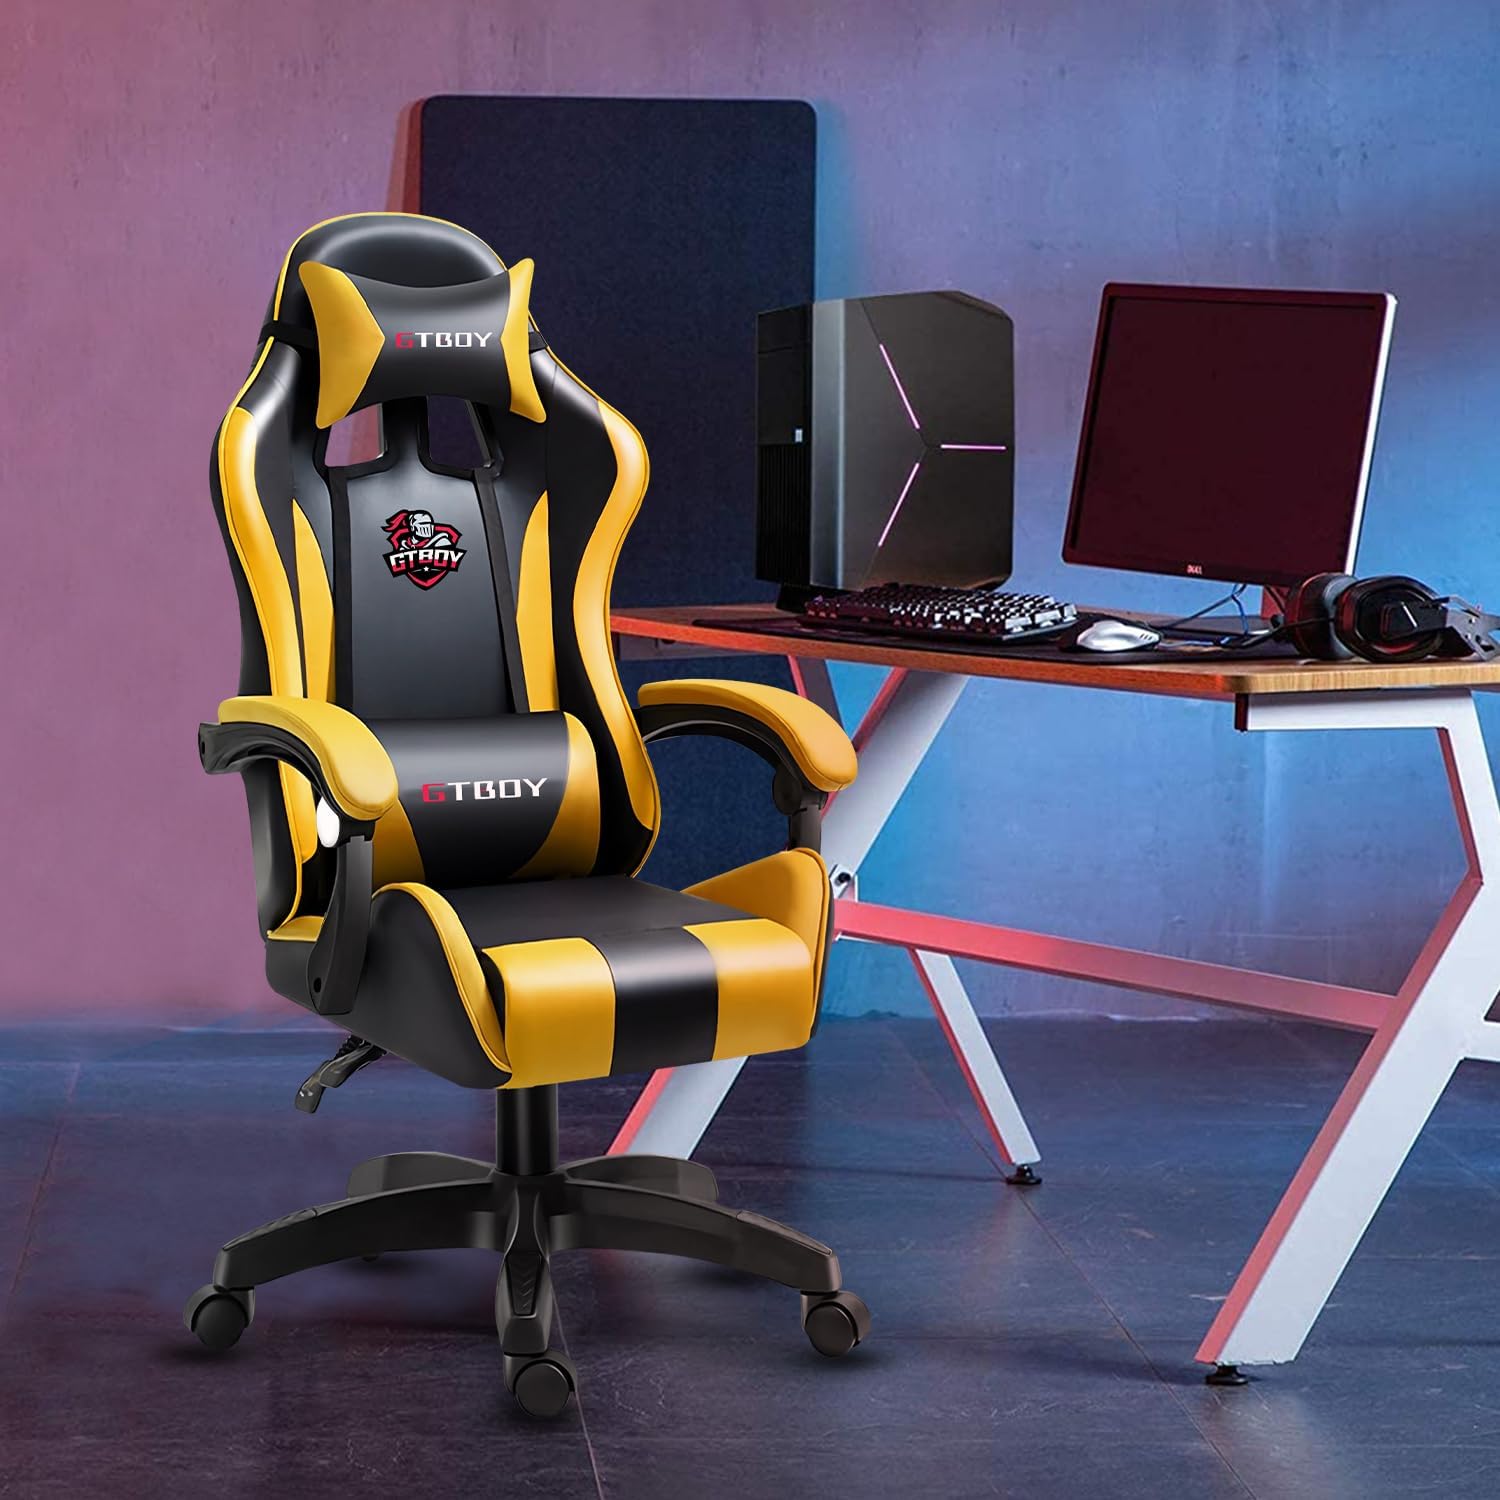 GTBoy ゲーミングチェア gaming chair PCゲーミングチェア ゲーム用チェア デスク pcチェア 椅子 テレワーク 140°リクライニング ゲームチェア ハイバック イス テレワーク【安心の非再生ウレタン採用】 (黒とイエロー, オットマンなし) 1